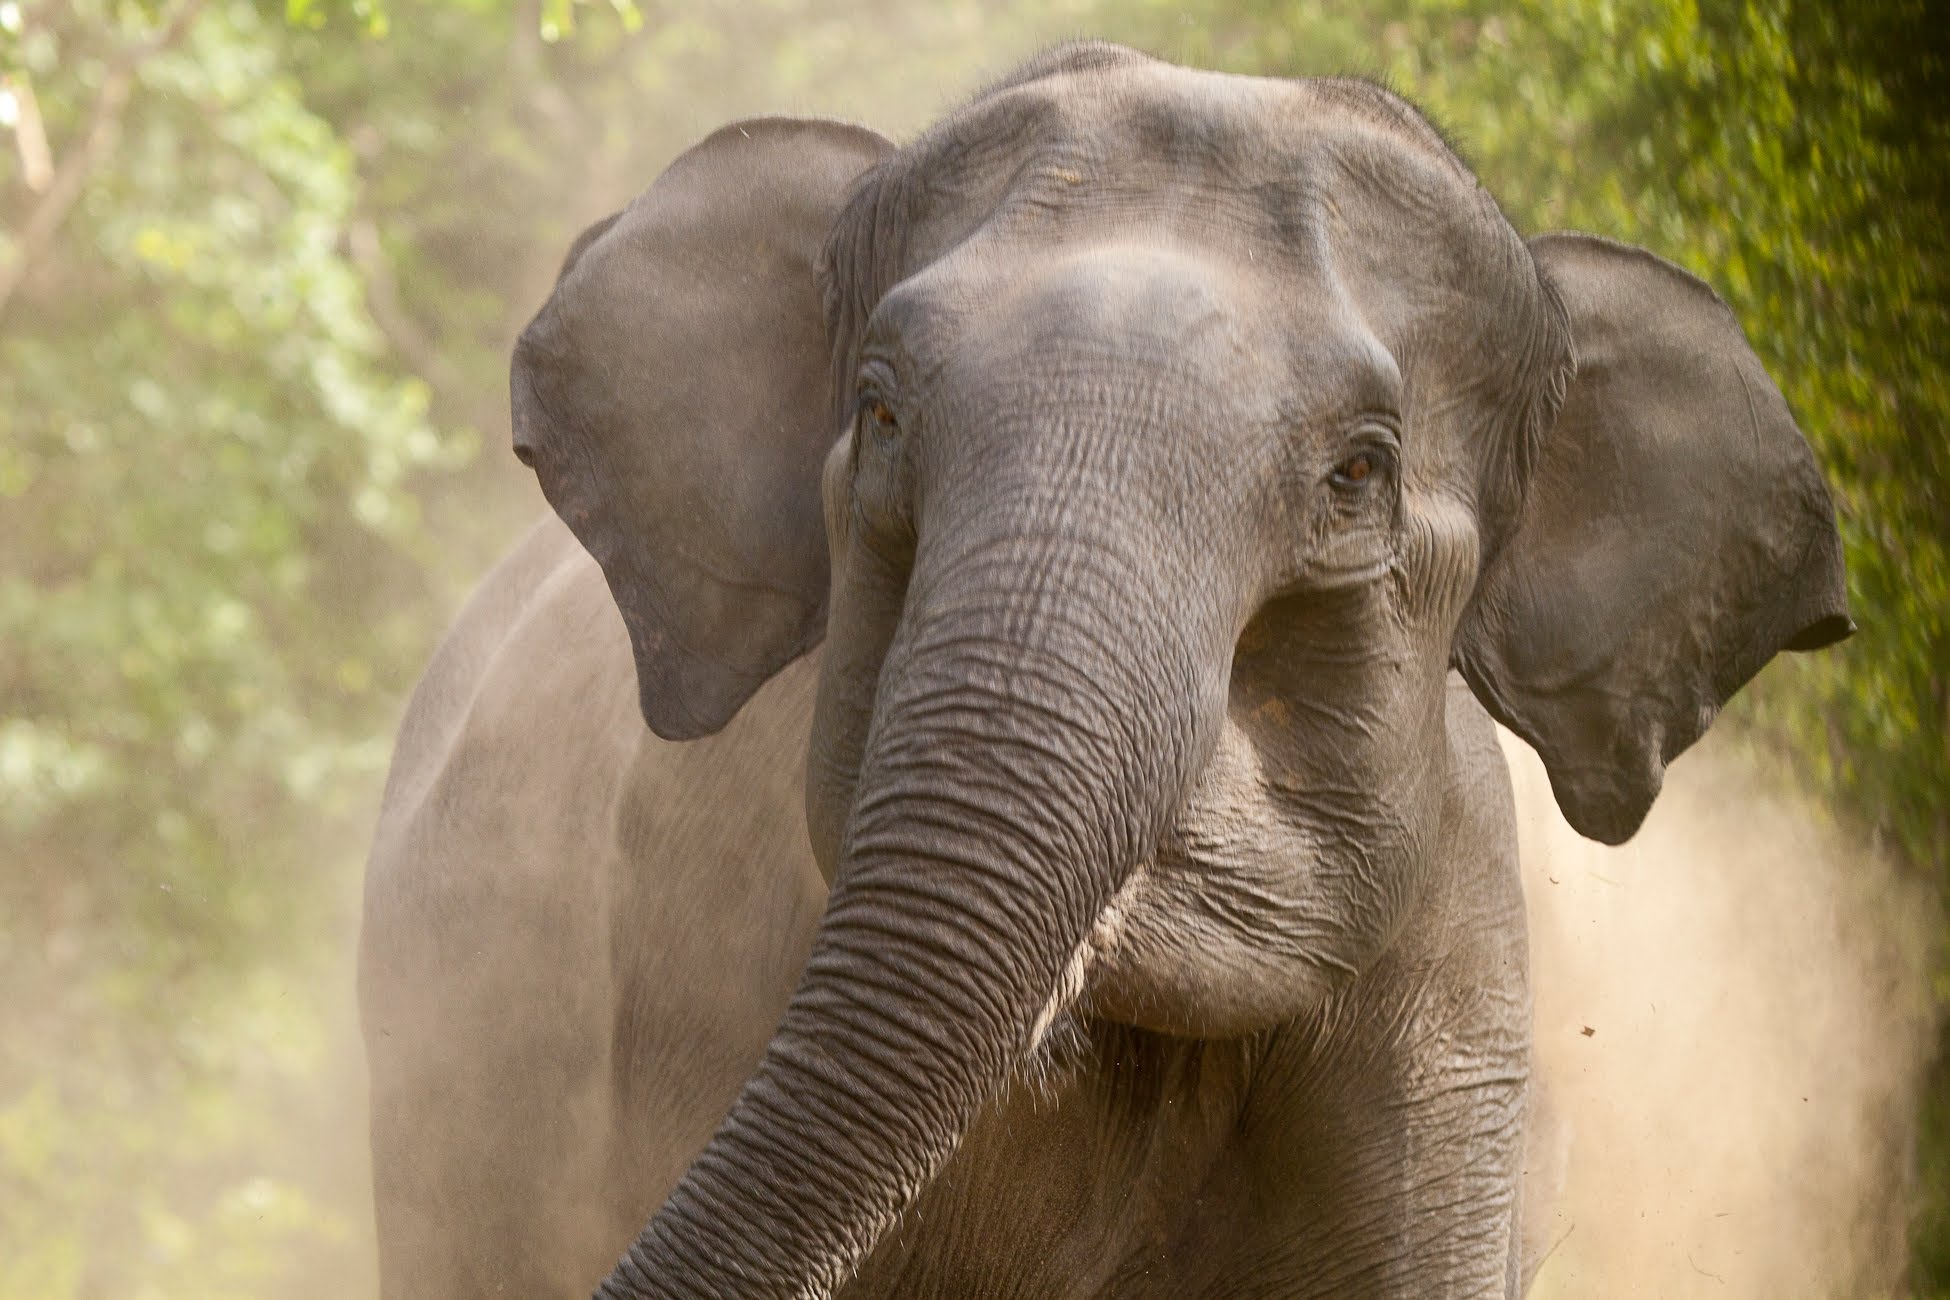 Wild India: Elephant Attack - YouTube